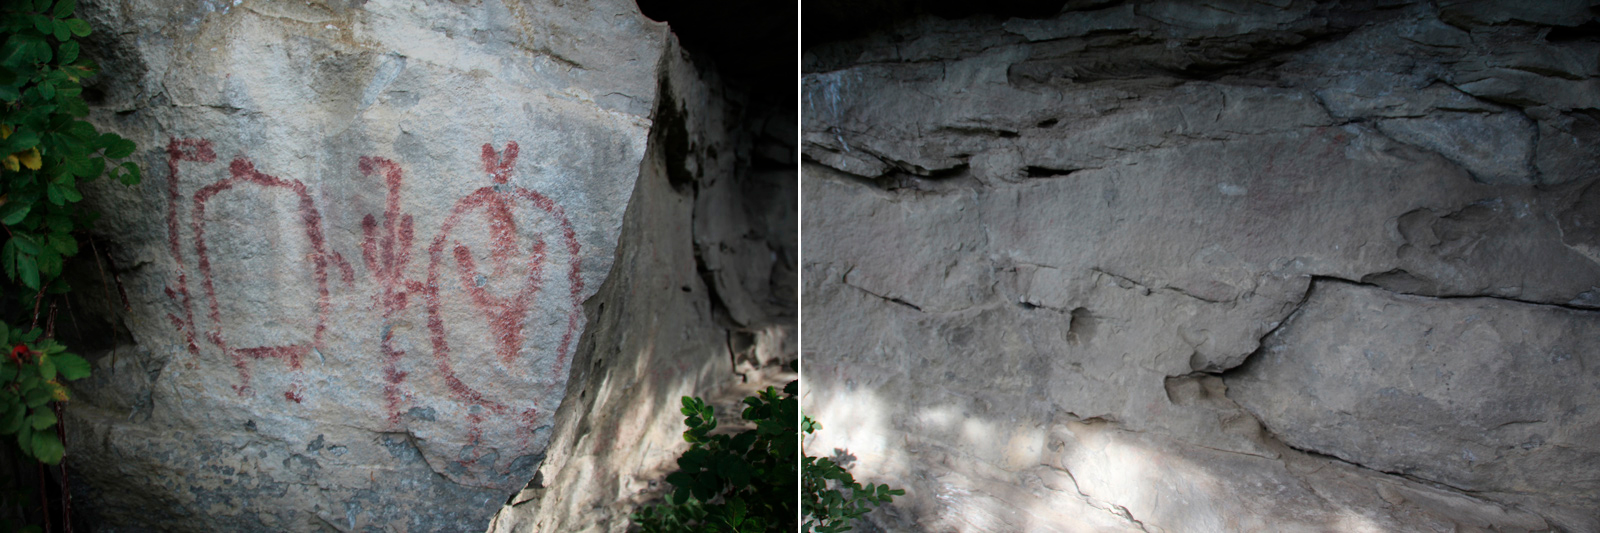 Rock Art Petroglyphs Pictographs Western Canada Pine Coulee near Nanton, Alberta